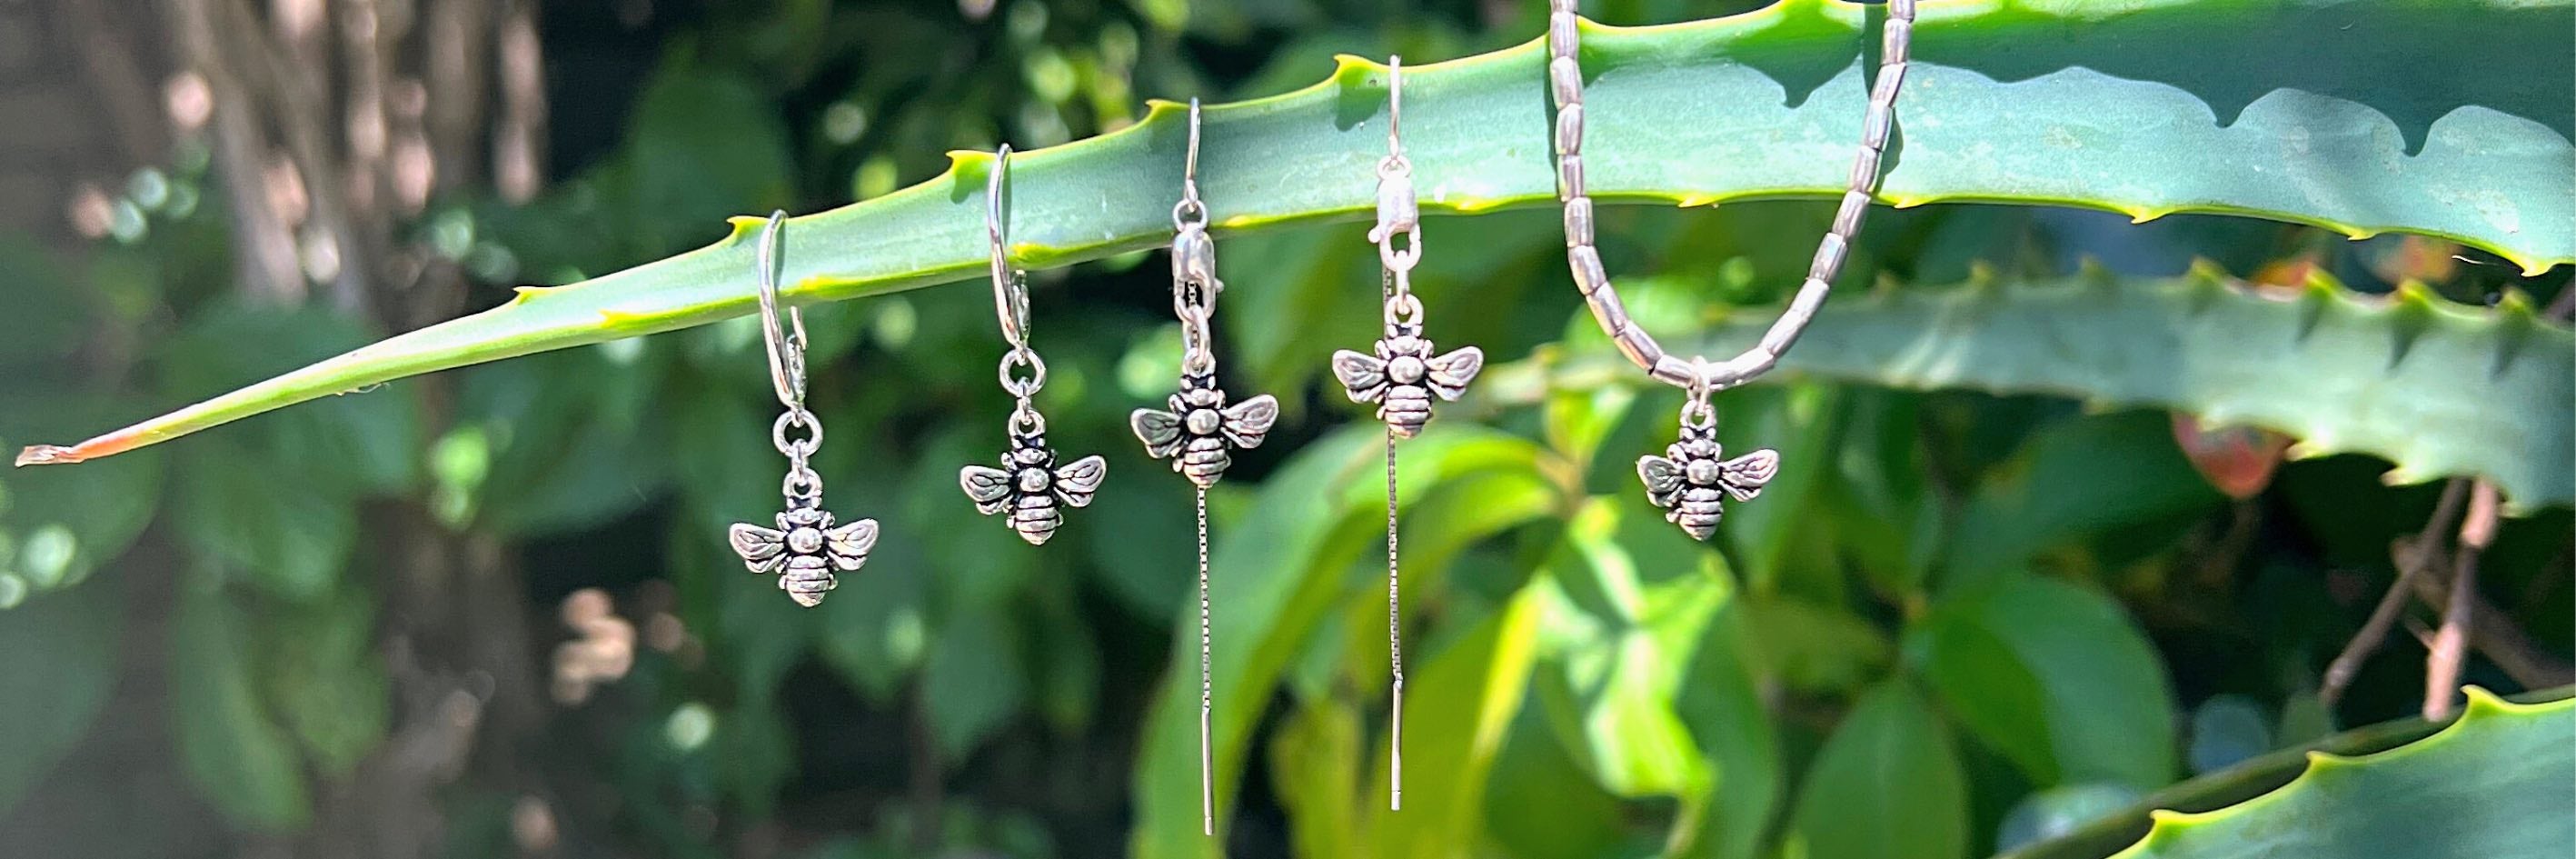 handmade sterling silver jewellery australia womens mens necklaces bracelets earrings oskye jewellery Honey bees